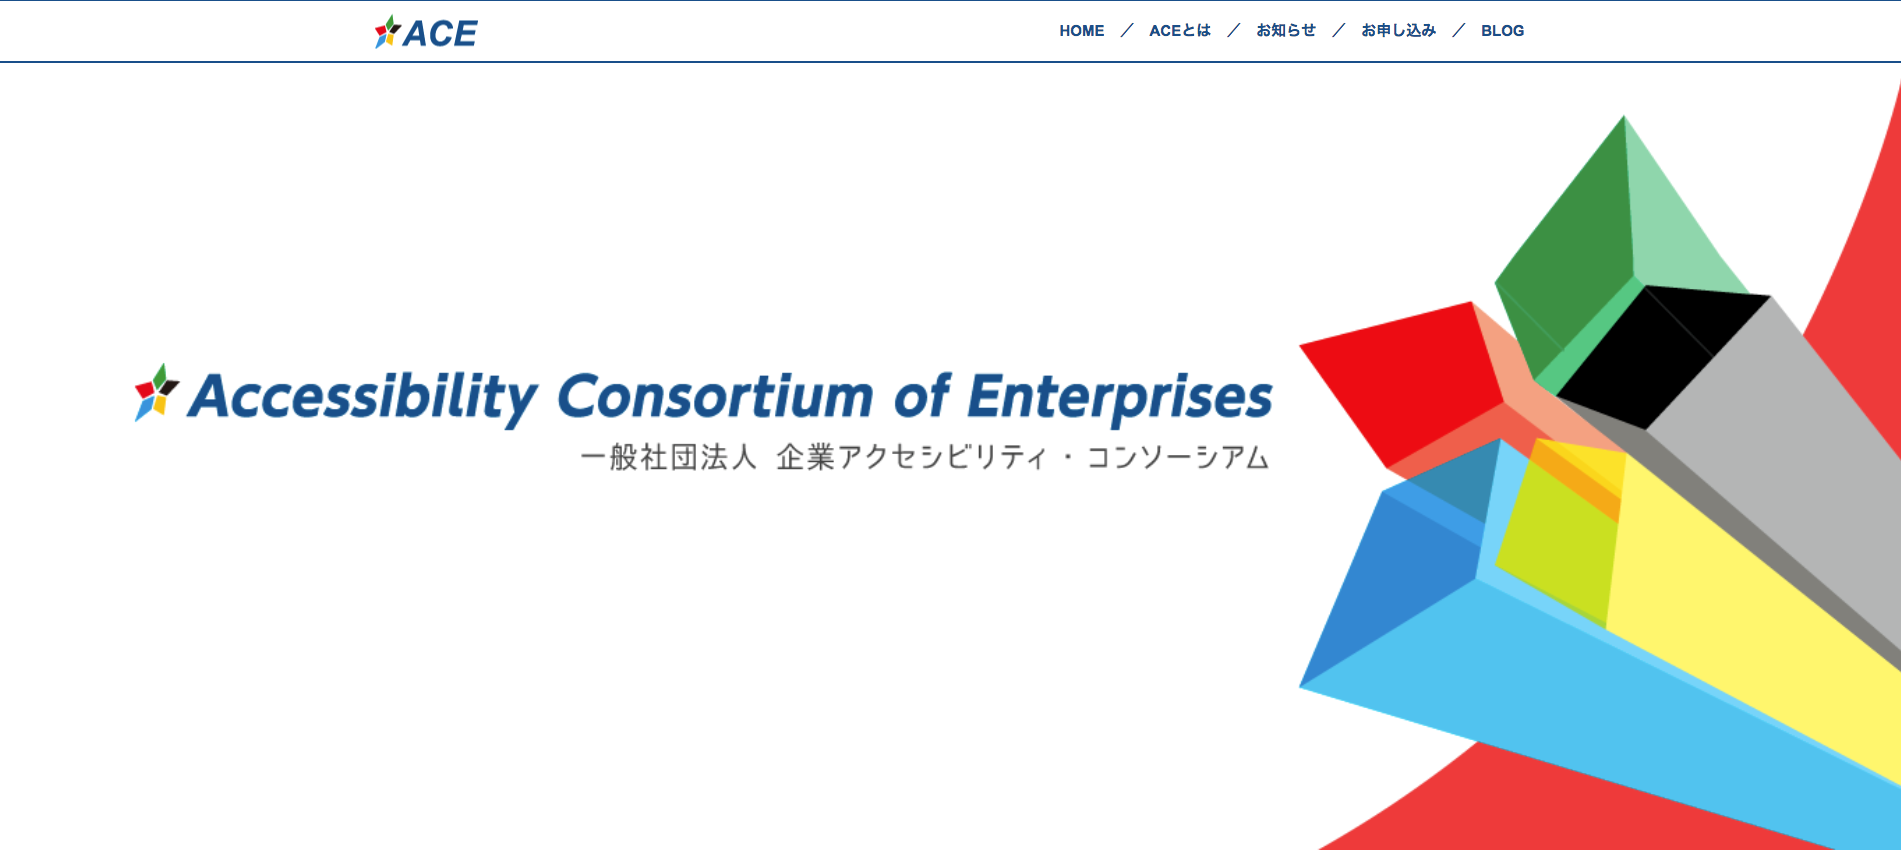 Accessibility Consortium of Enterprises、一般社団法人企業アクセシビリティ・コンソーシアムのホームページ画面